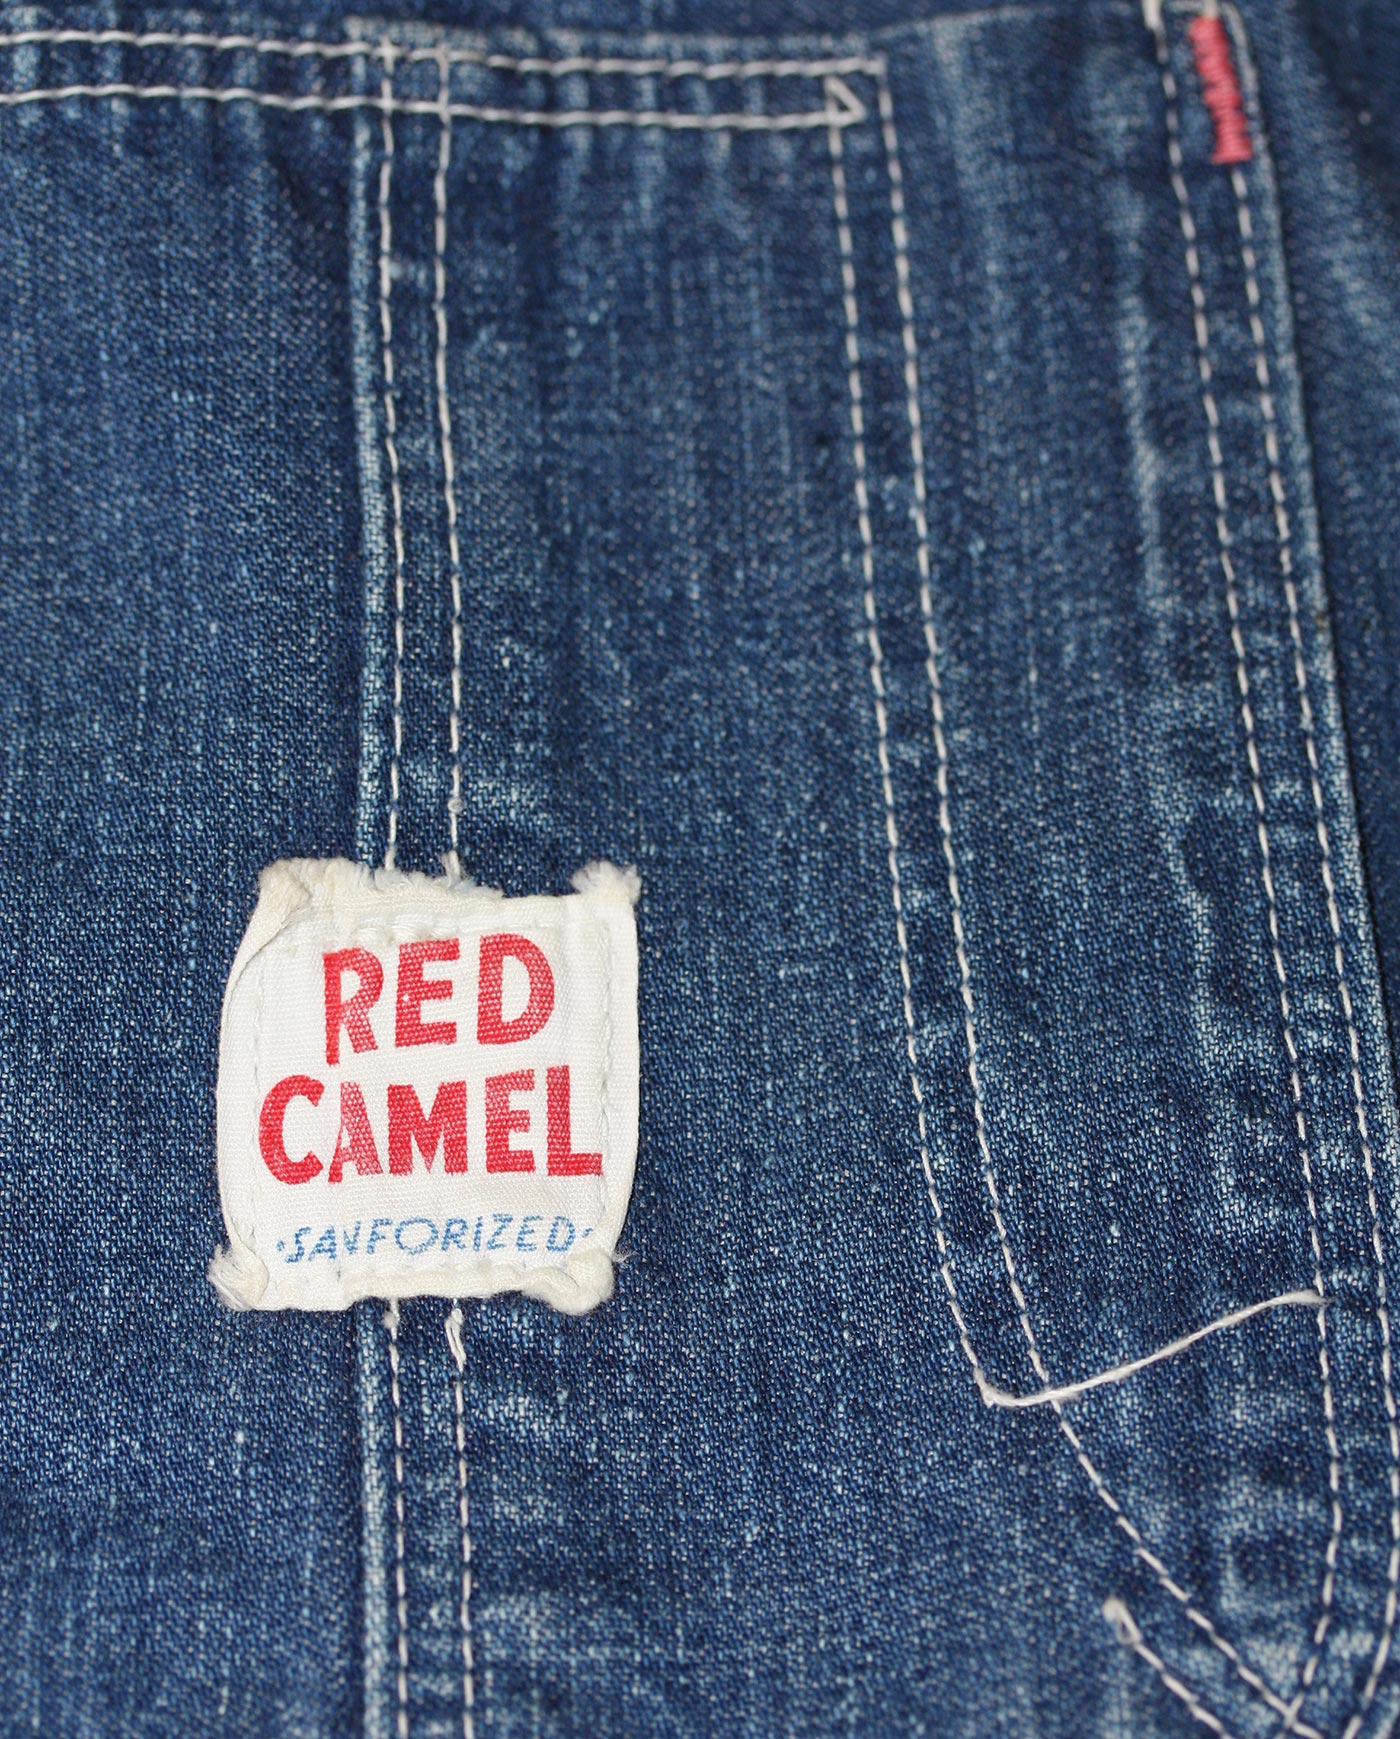 red camel blue jeans